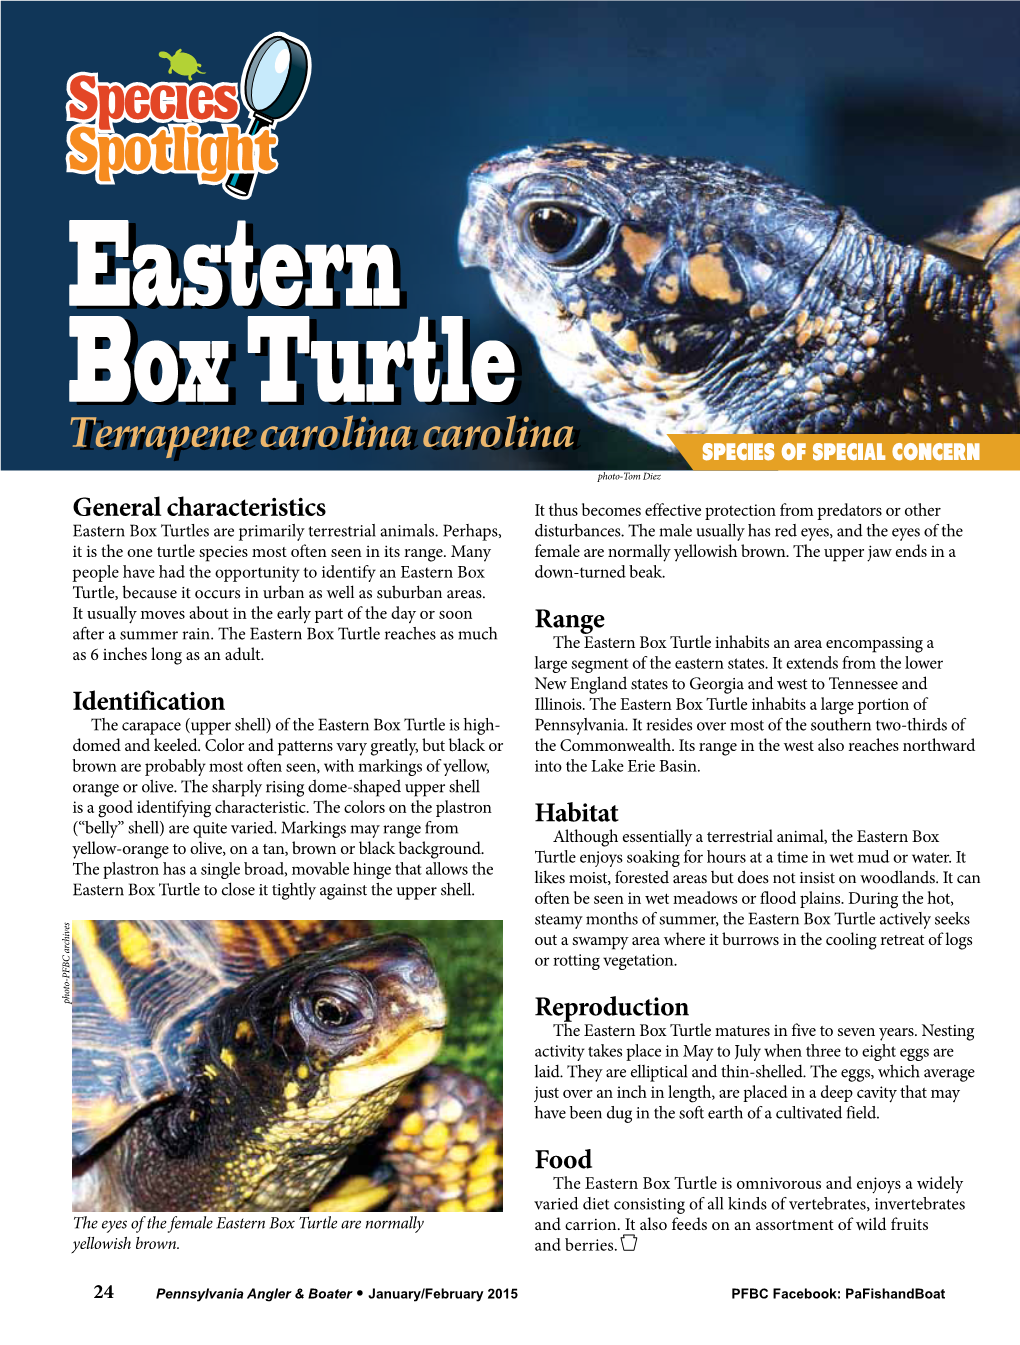 Eastern Box Turtles Are Primarily Terrestrial Animals